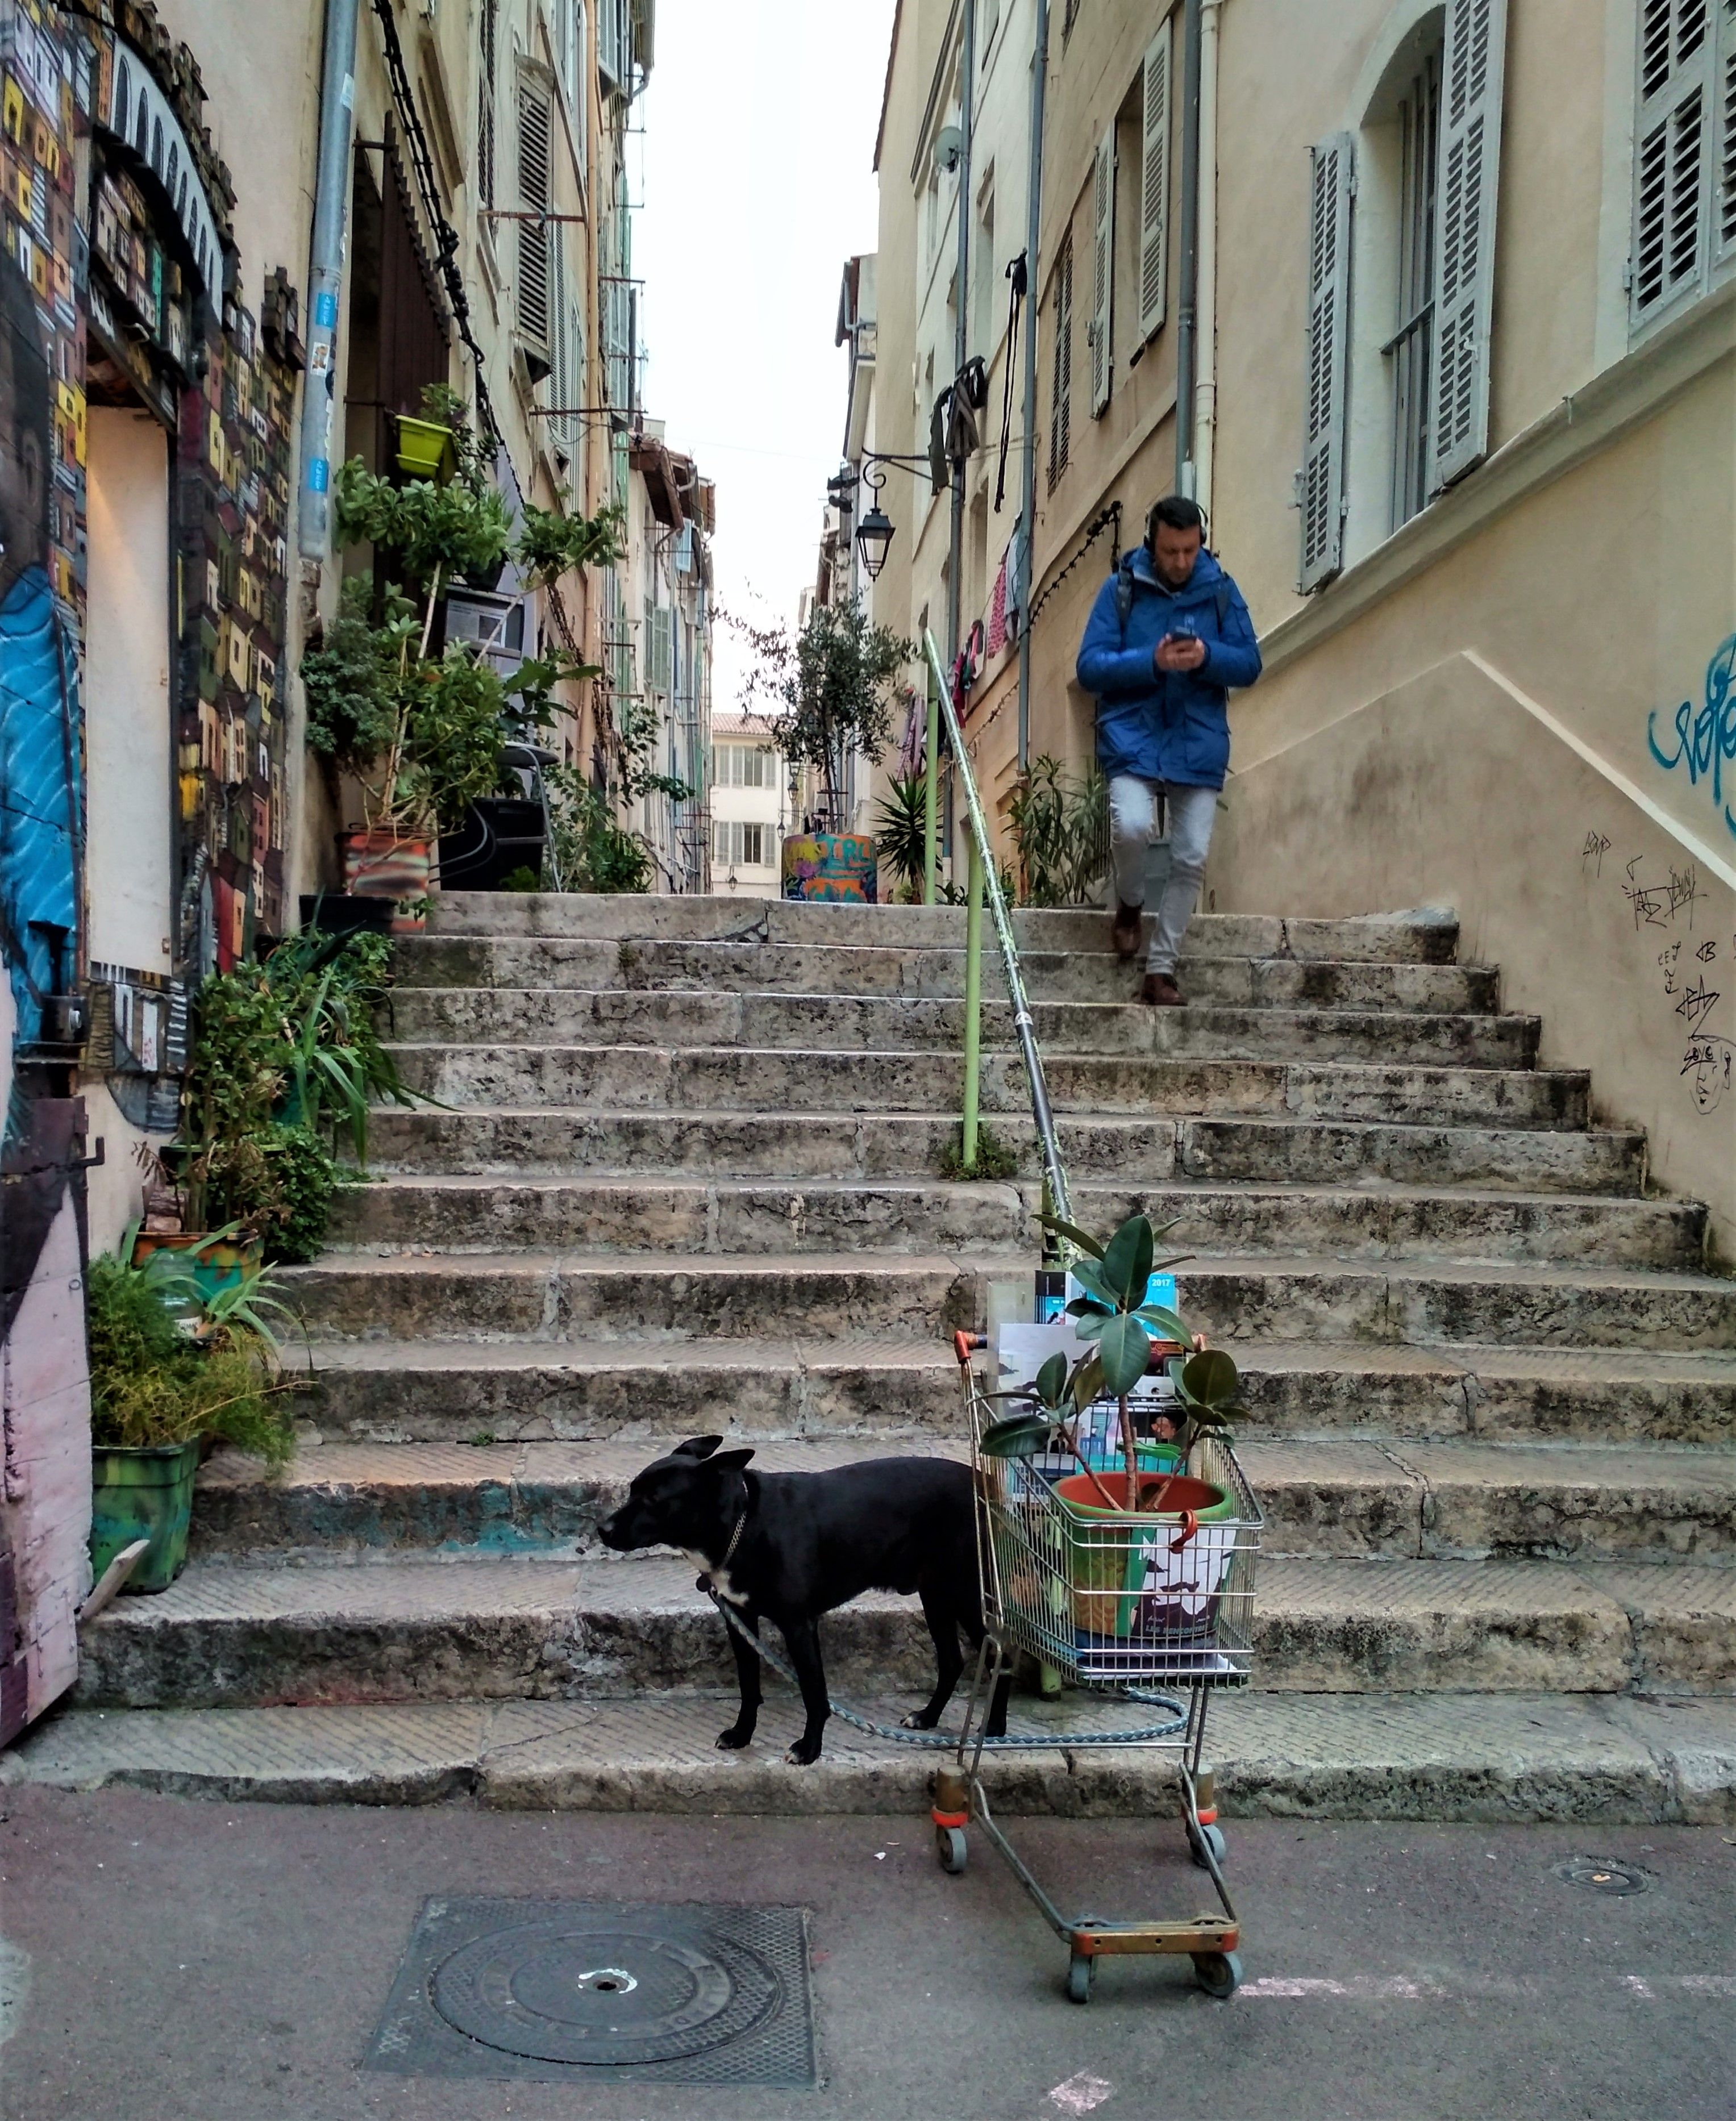 Le Panier, Marseille